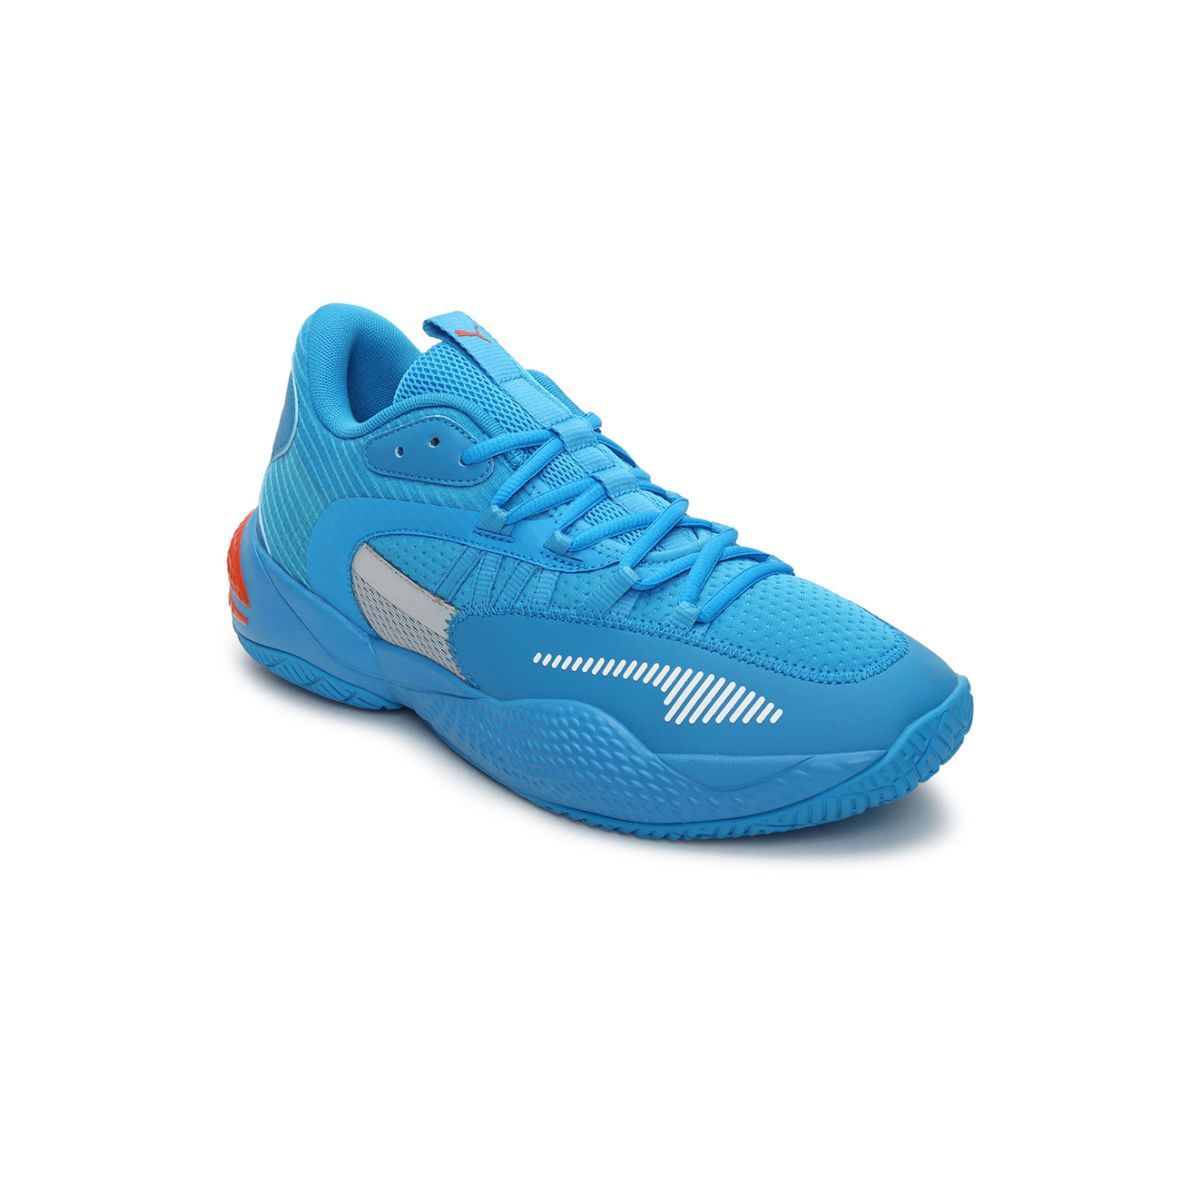 Puma Court Rider 2 0 Blue Basketball Shoes (UK 7): Buy Puma Court Rider